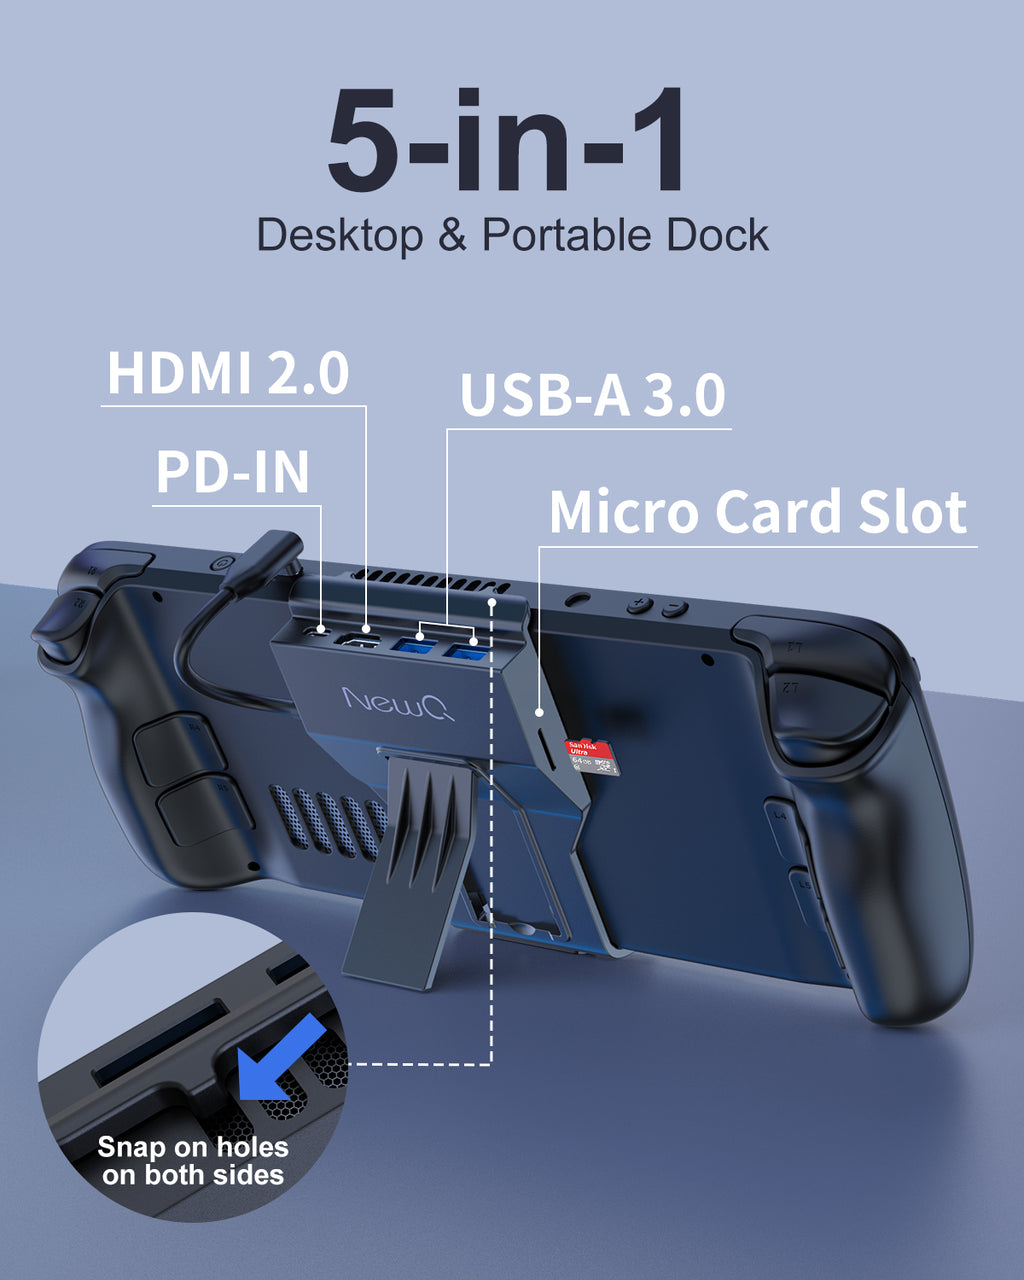 Portable Steam Deck Dock: 5-in-1 USB C Docking Station with TF Card Slot,  HDMI 2.0 4K@60H, 2*USB-A 3.0, USB-C PD 100W Max, Stream Deck Dock Stand  Base